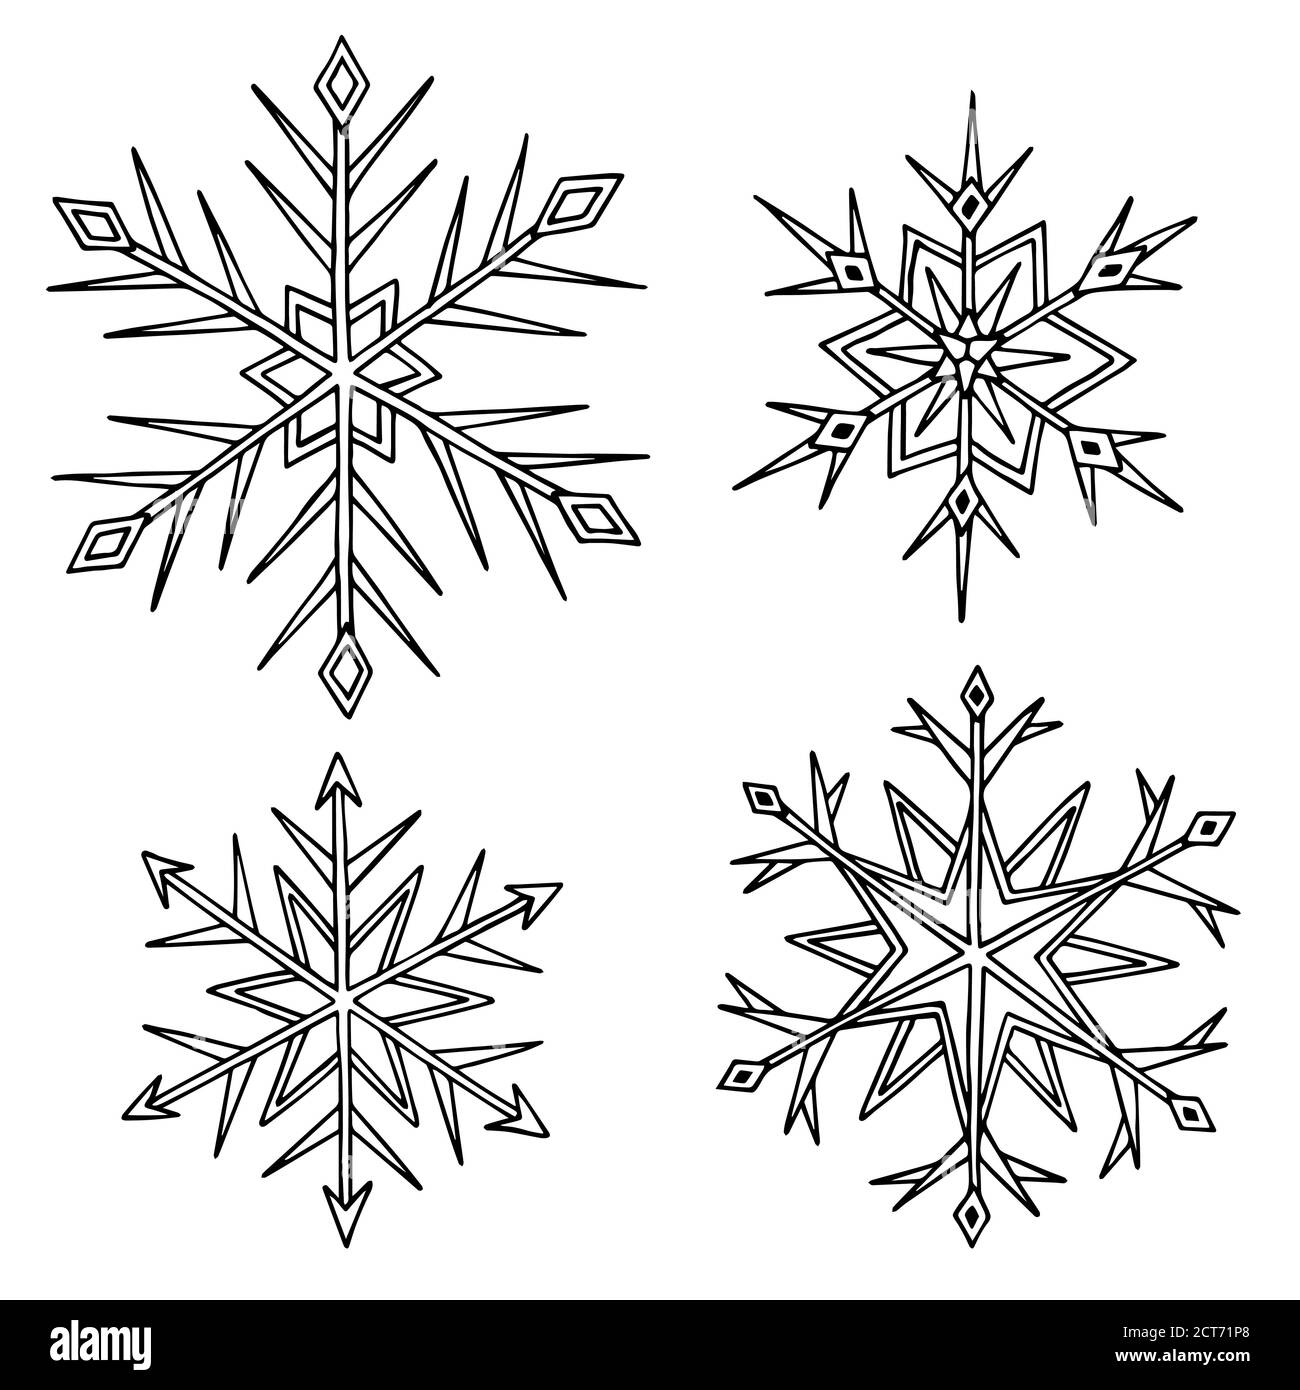 Snowflakes graphic art black white isolated set illustration vector ...